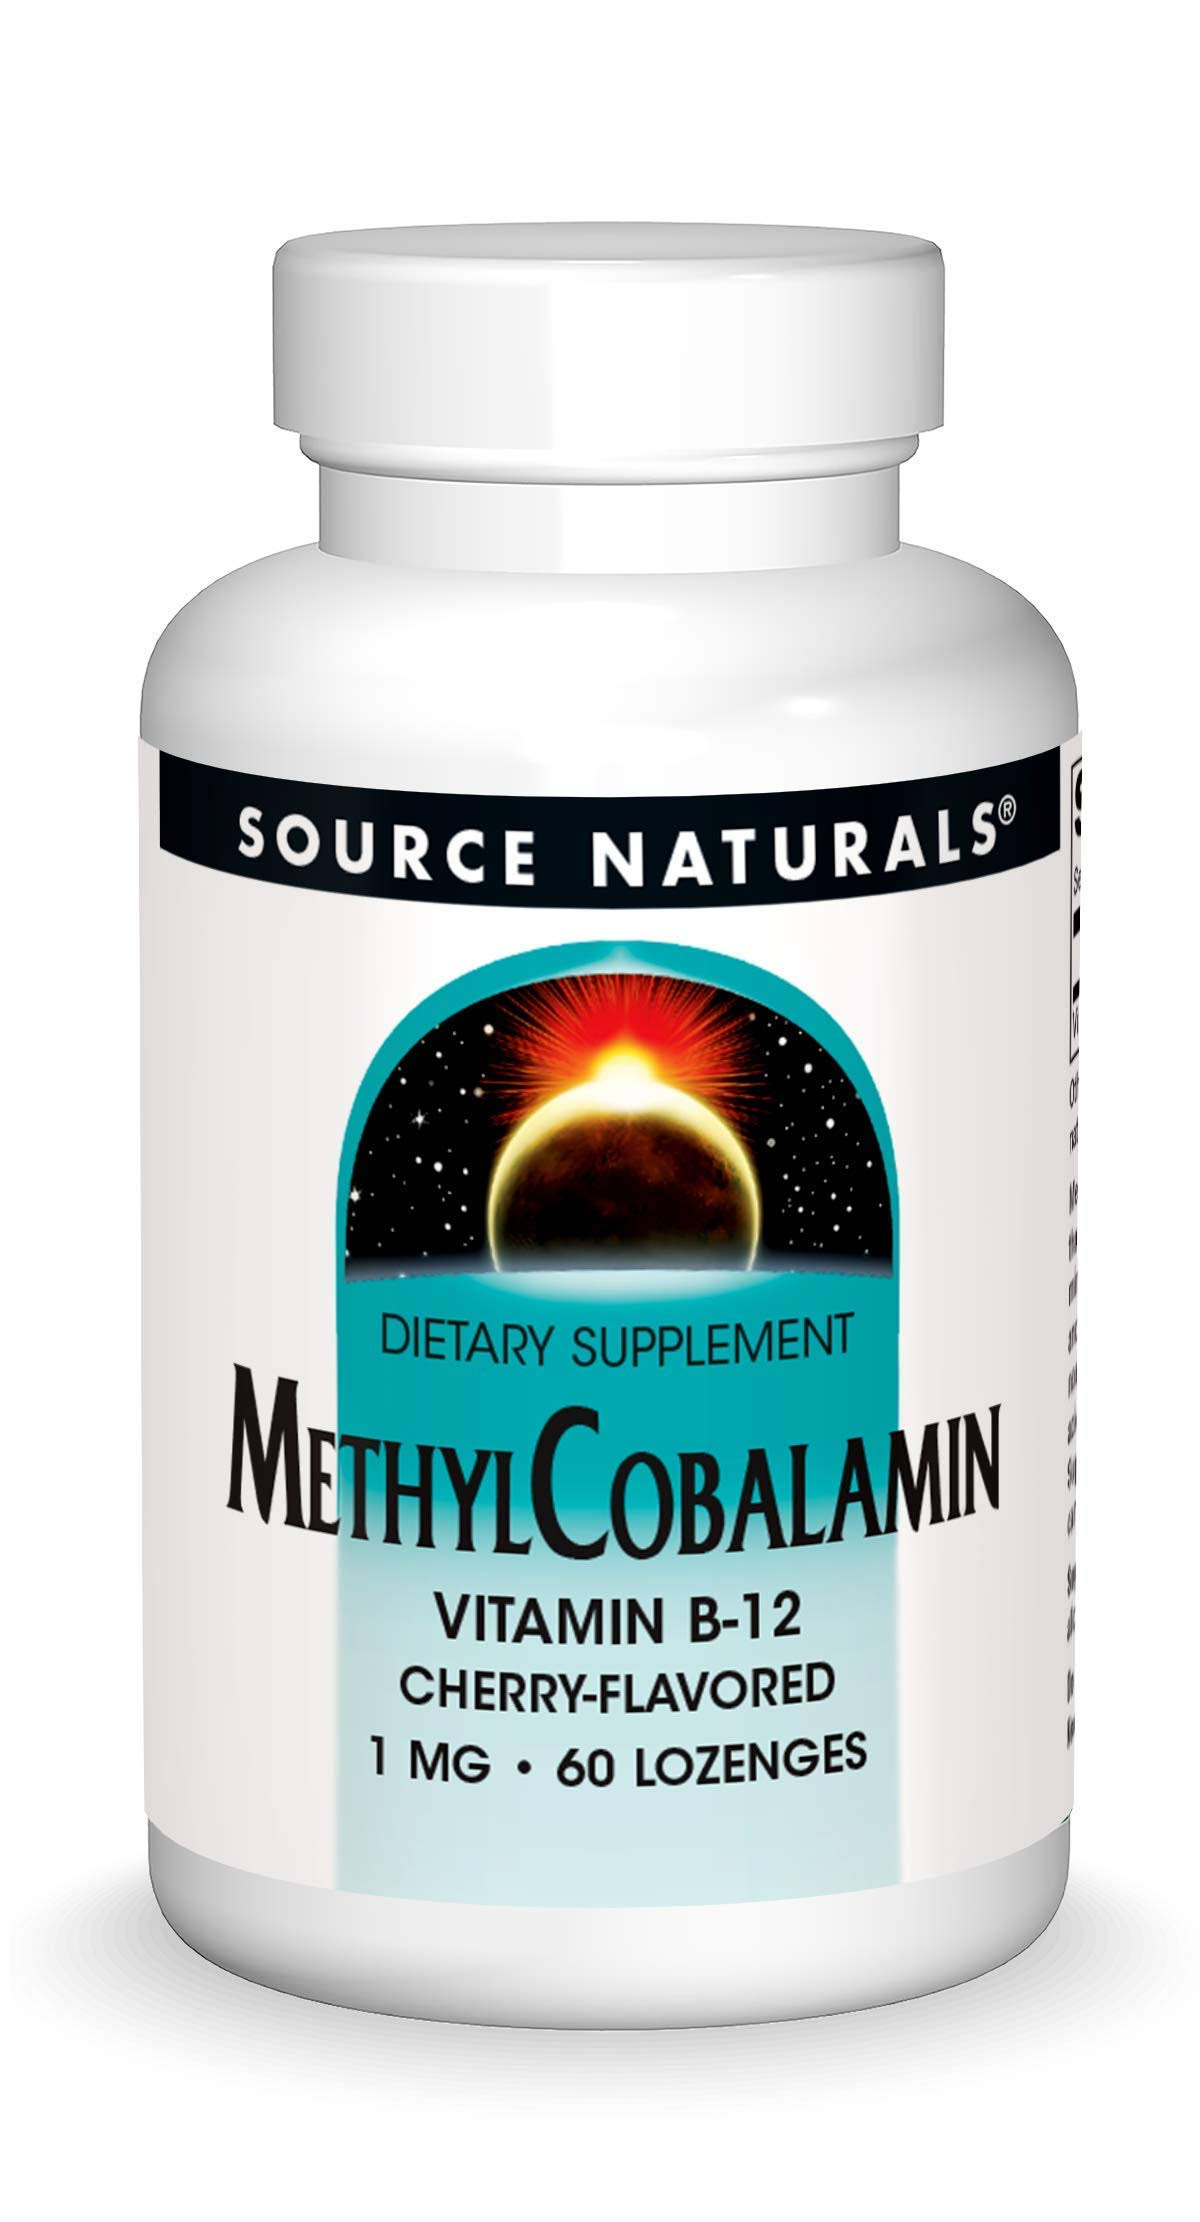 Source Naturals Methylcobalamin Vitamin B-12 Dietary Supplement - 60 Tablets